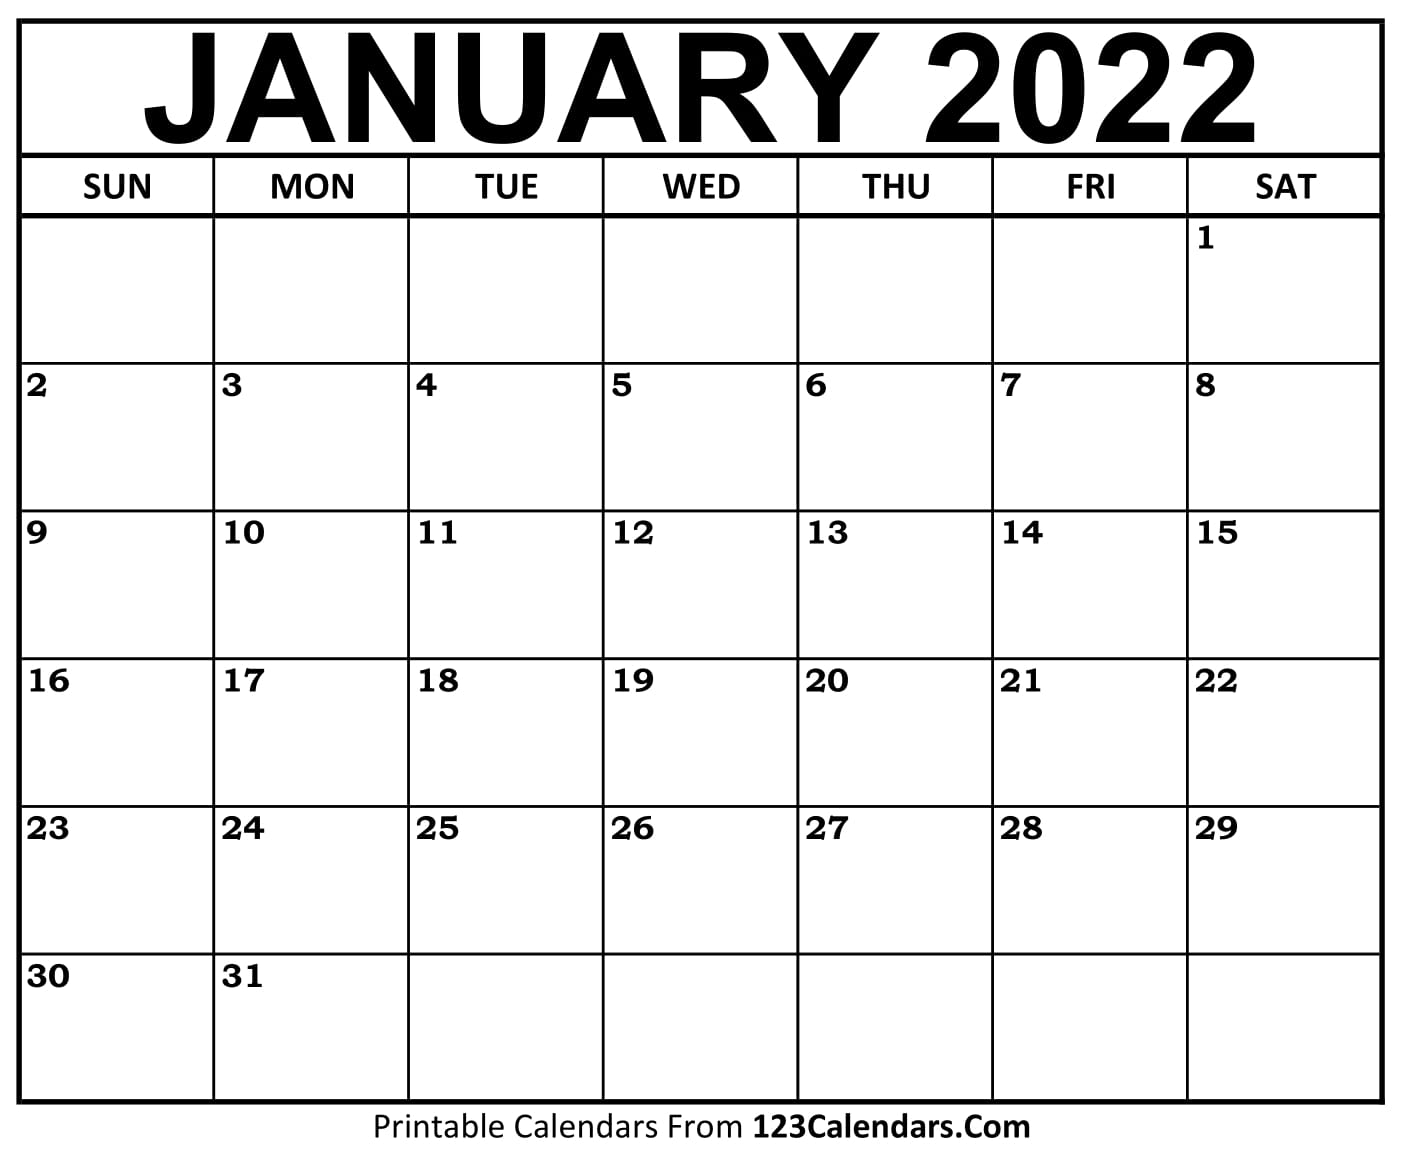 Free January 2022 Printable Calendar Printable January 2022 Calendar Templates - 123Calendars.com